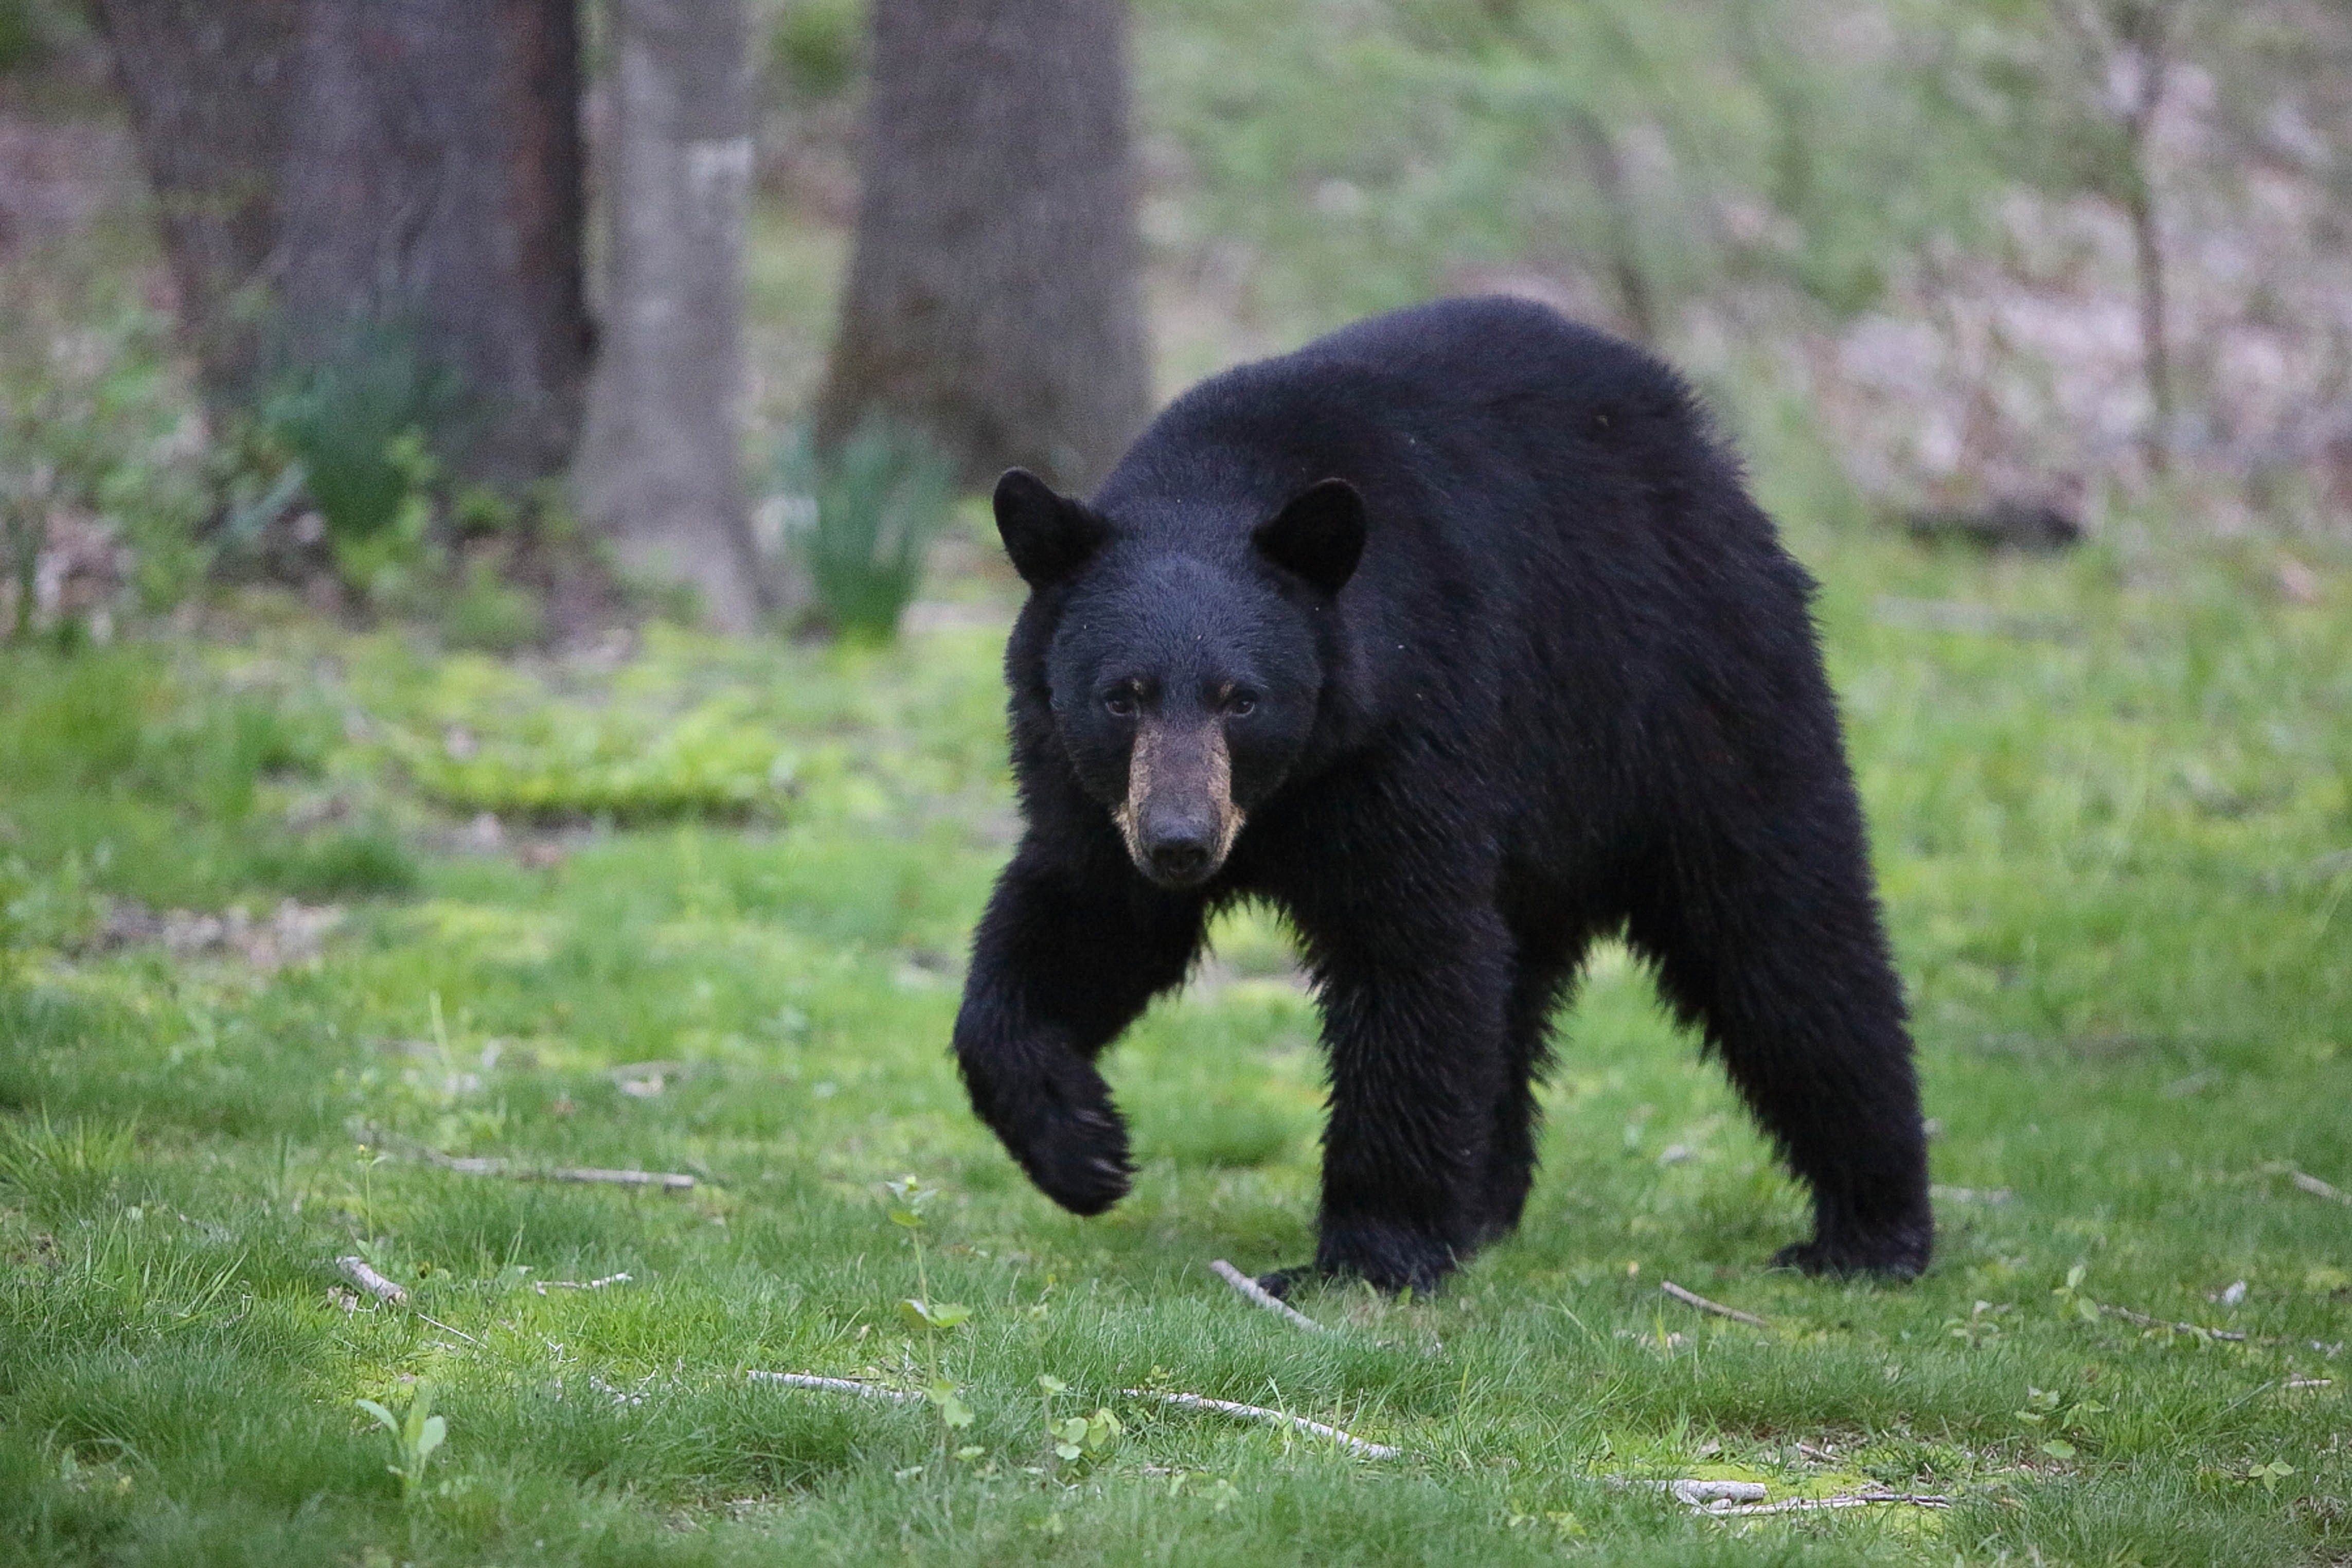 Black bear walking through green lawn